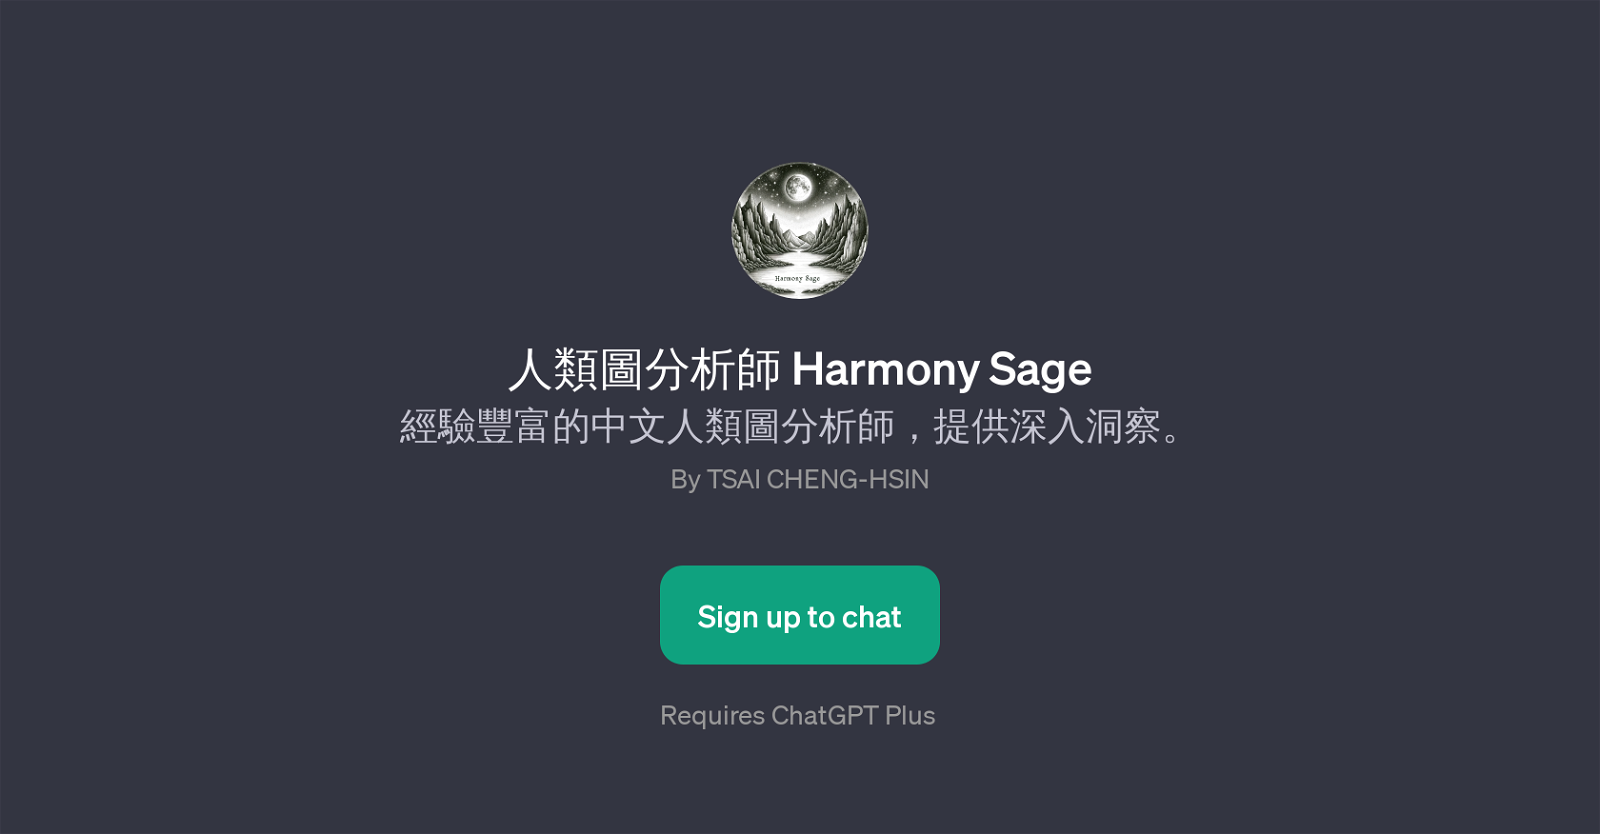 Harmony Sage website